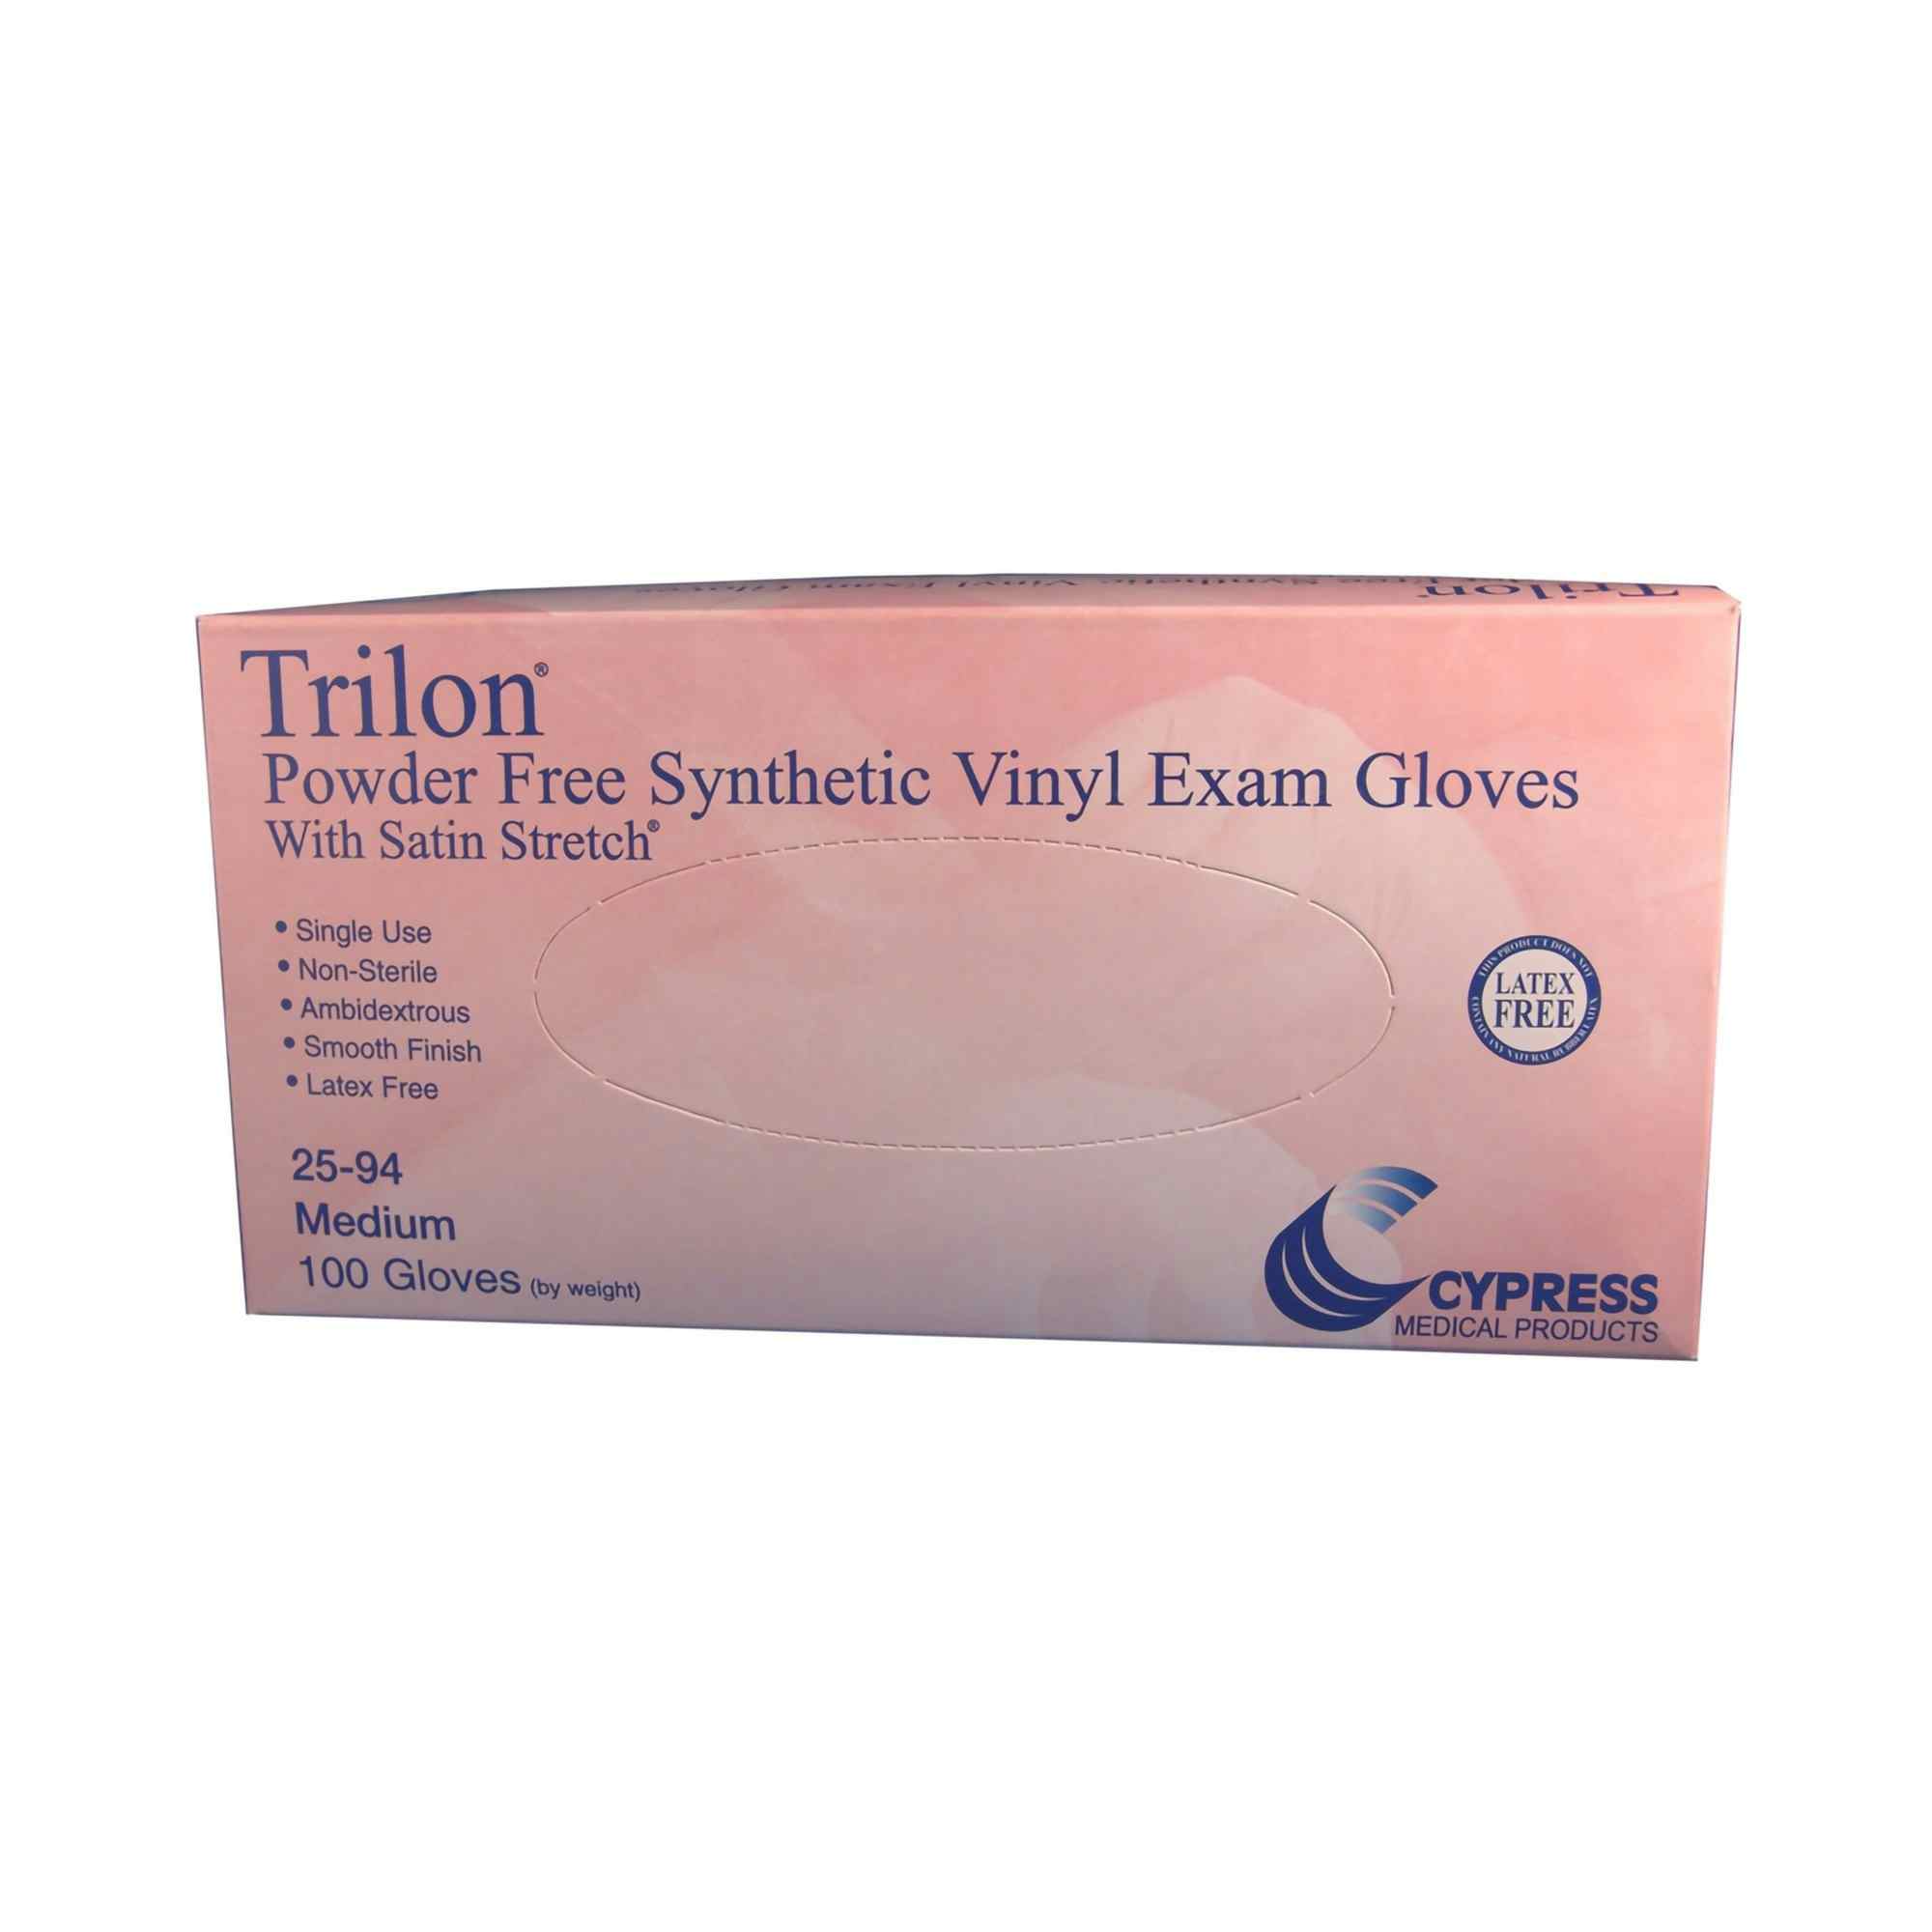 Trilon Powder Free Synthetic Vinyl Exam Glove, Clear